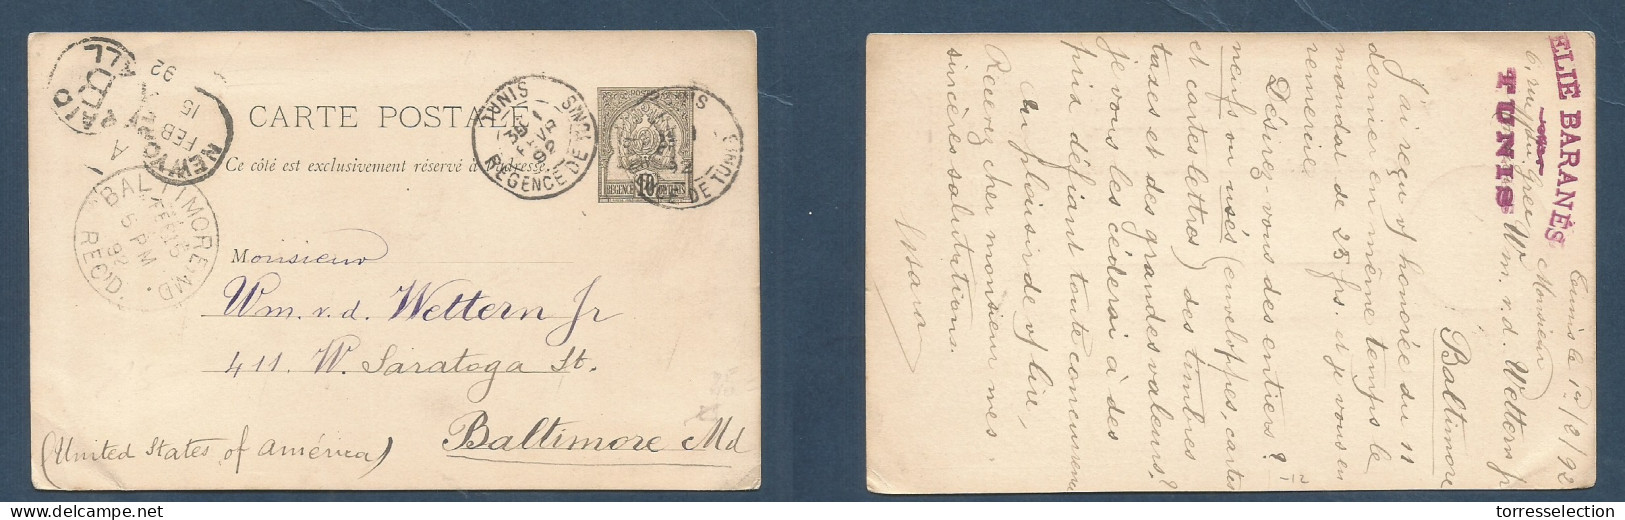 TUNISIA. 1892 (1 Febr) GPO - USA, Baltimore, Md (15 Feb) 10c Black Early Stat Card. Fine Used Via NYC. XSALE. - Tunisia (1956-...)